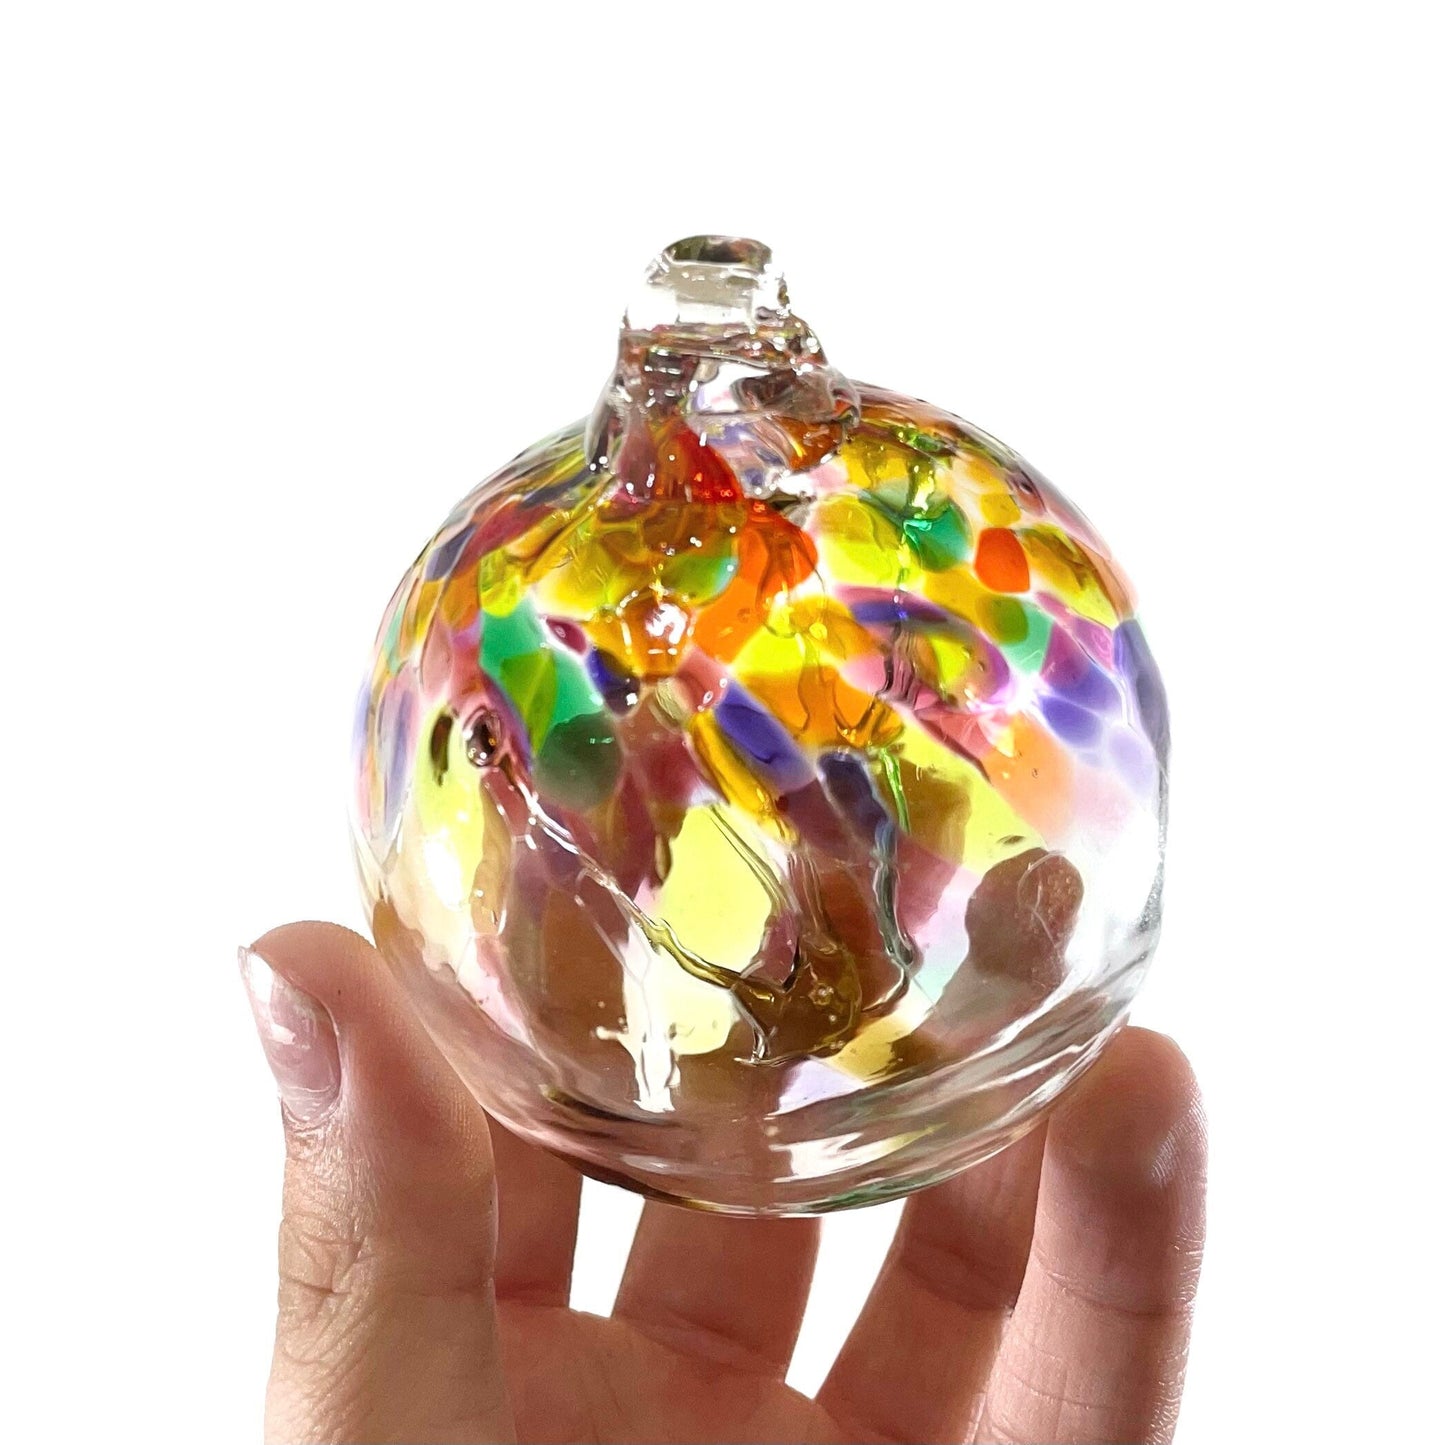 Handmade Glass Art 2” Globe Ornament - Tree of Celebration